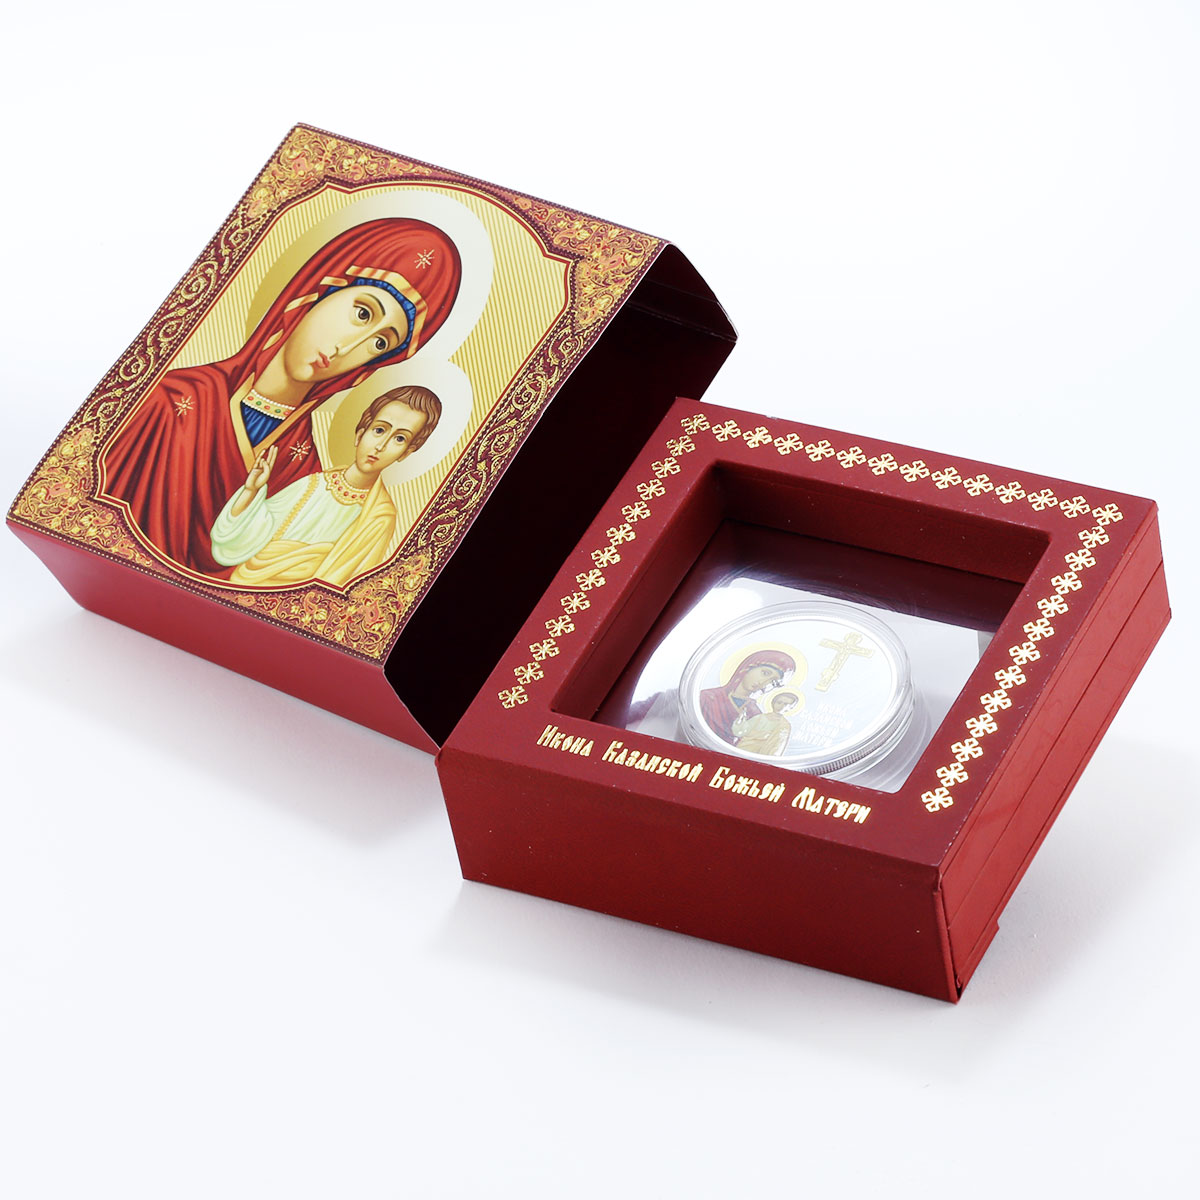 Chad 5000 francs Orthodox Saints Virgin Mary of Kazan proof silver coin 2015